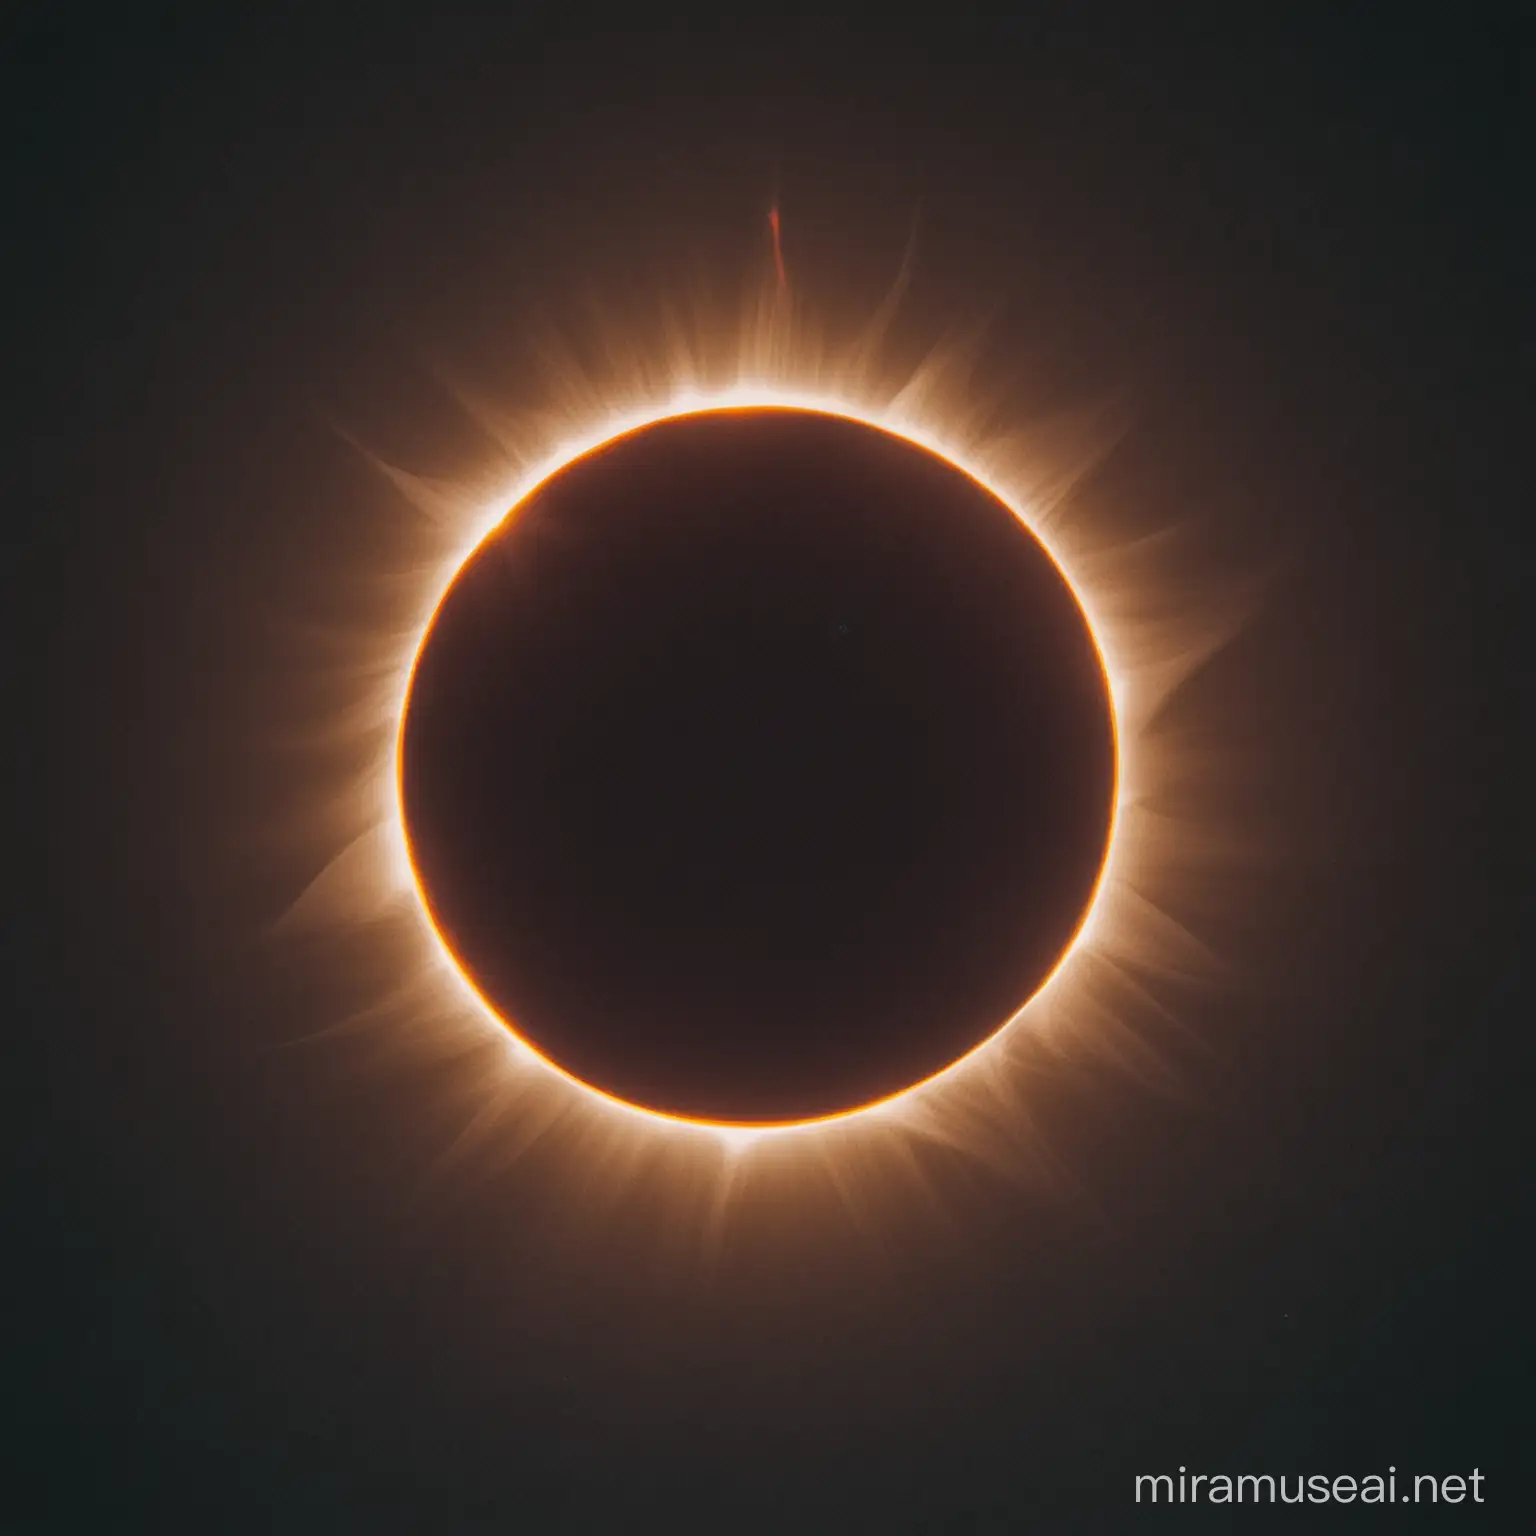 Breathtaking Solar Eclipse Illuminating Earths Atmosphere